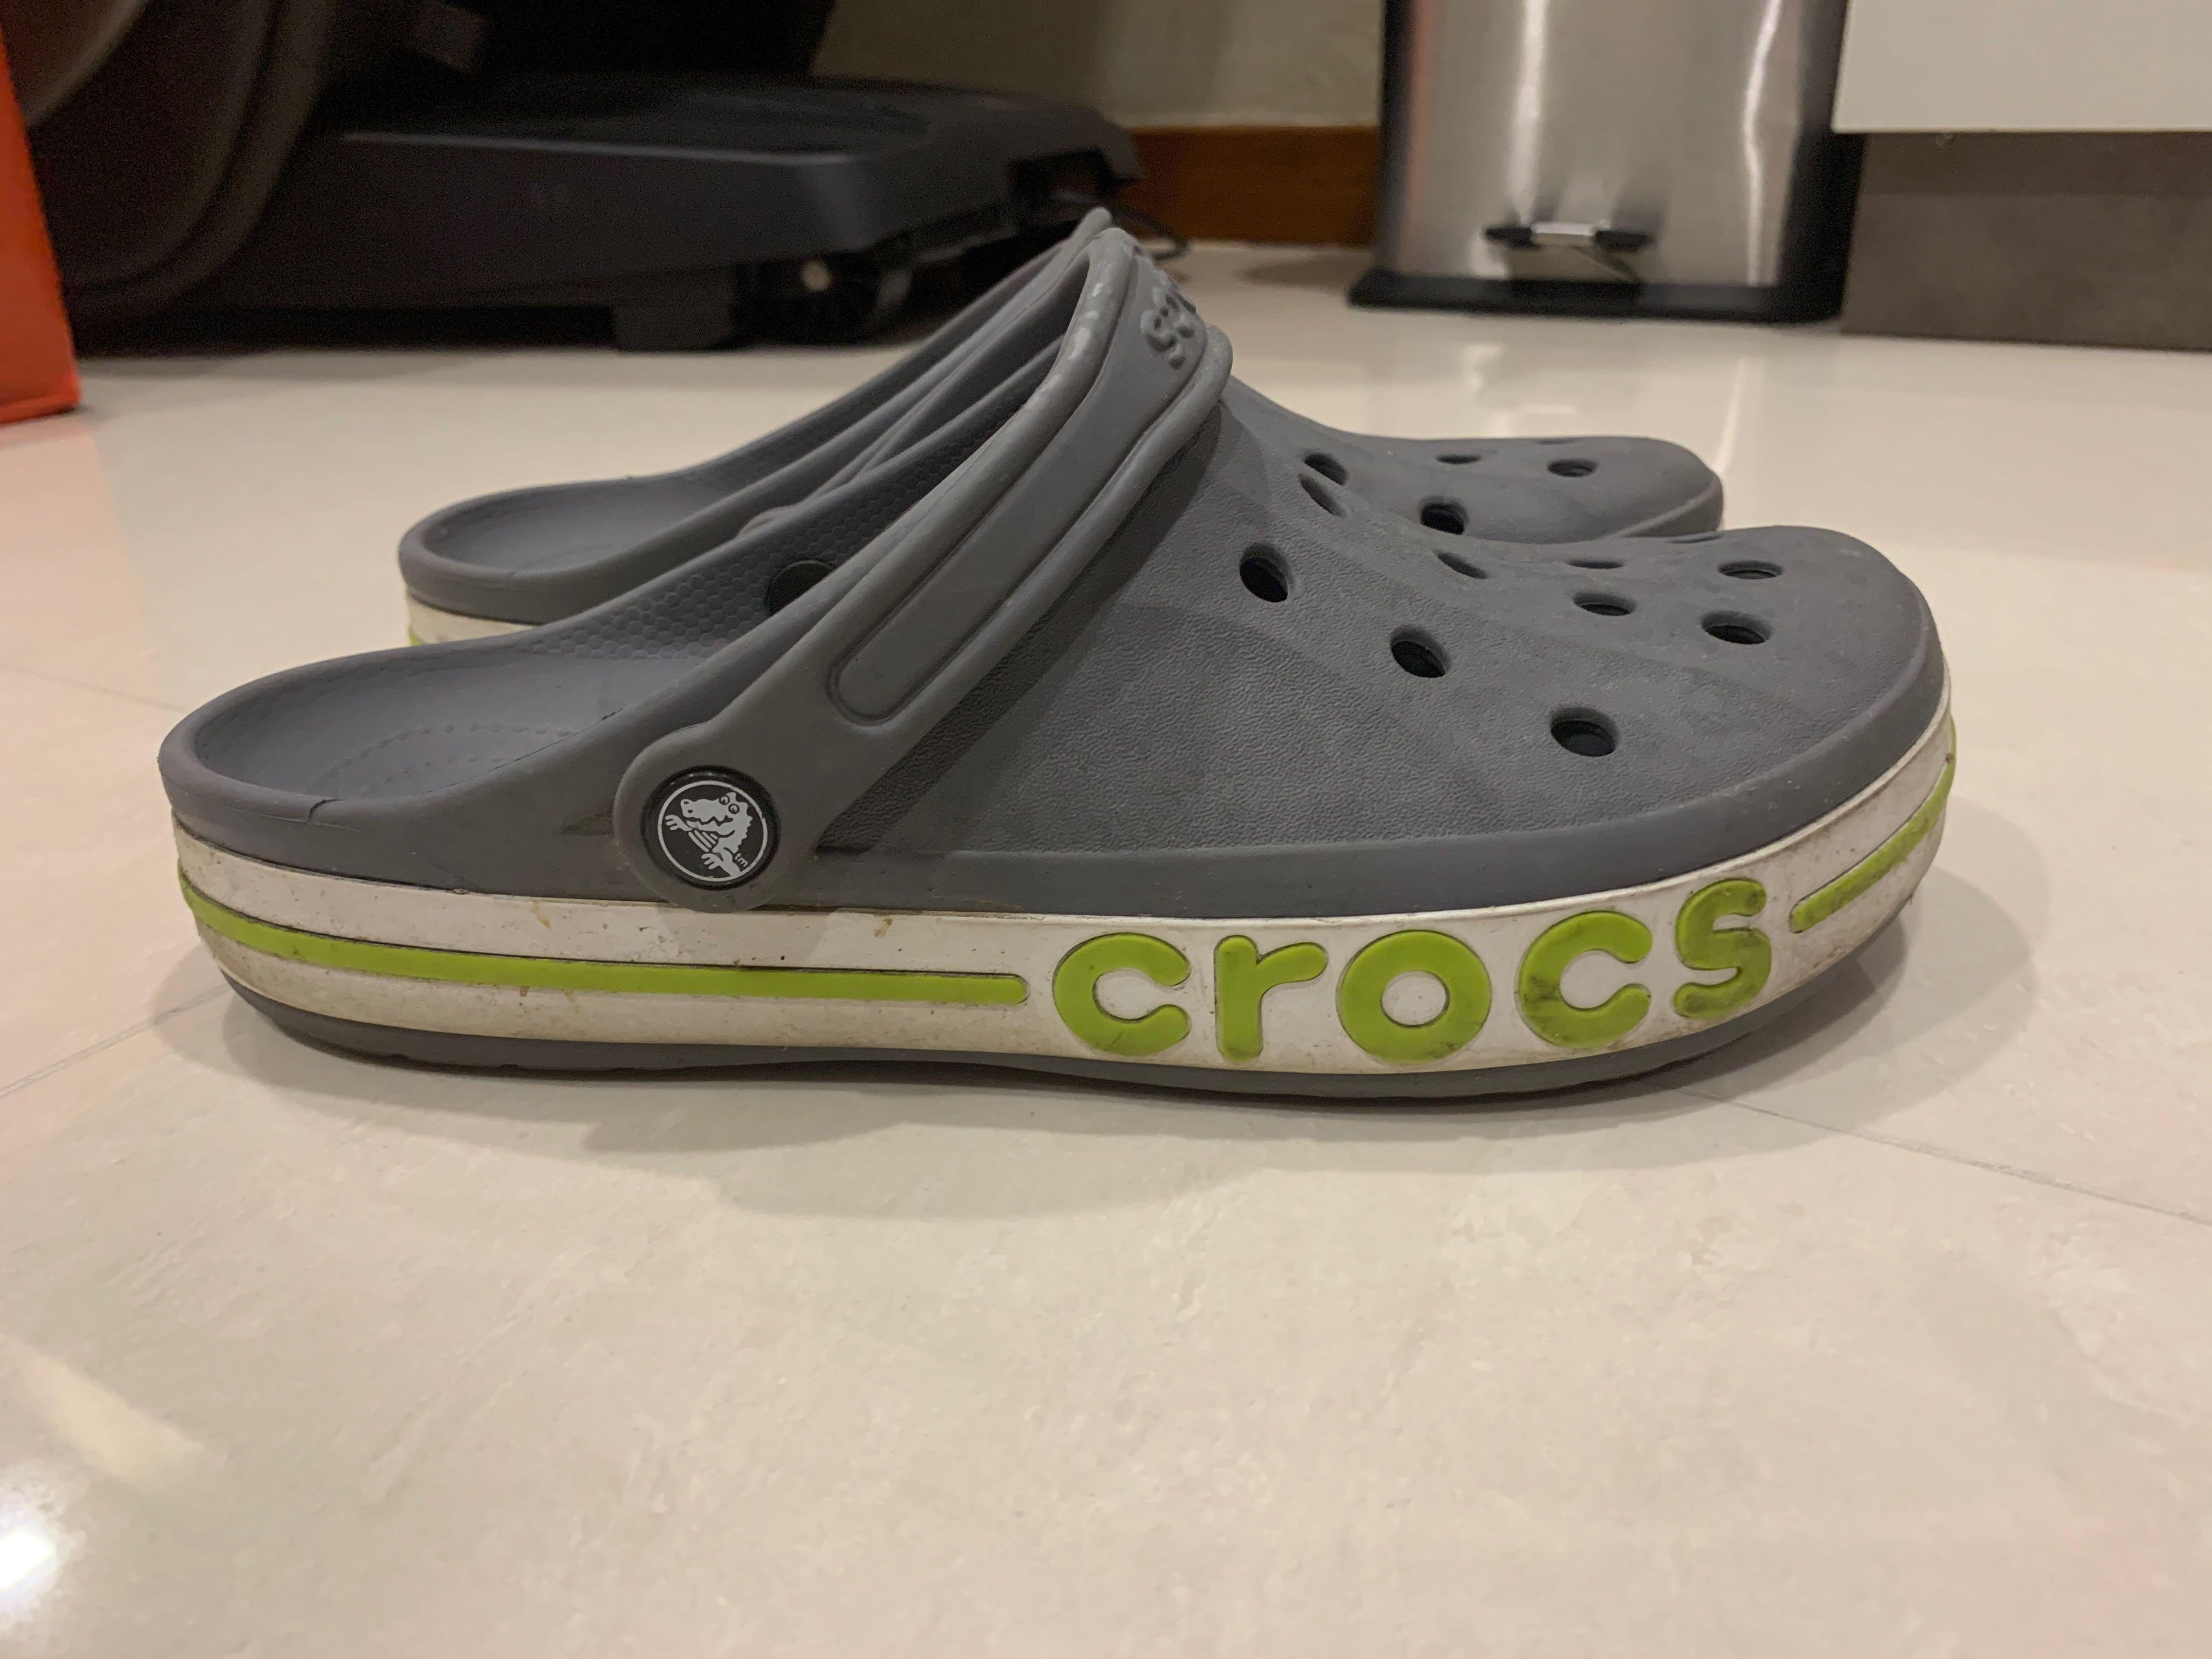 m9 size in crocs